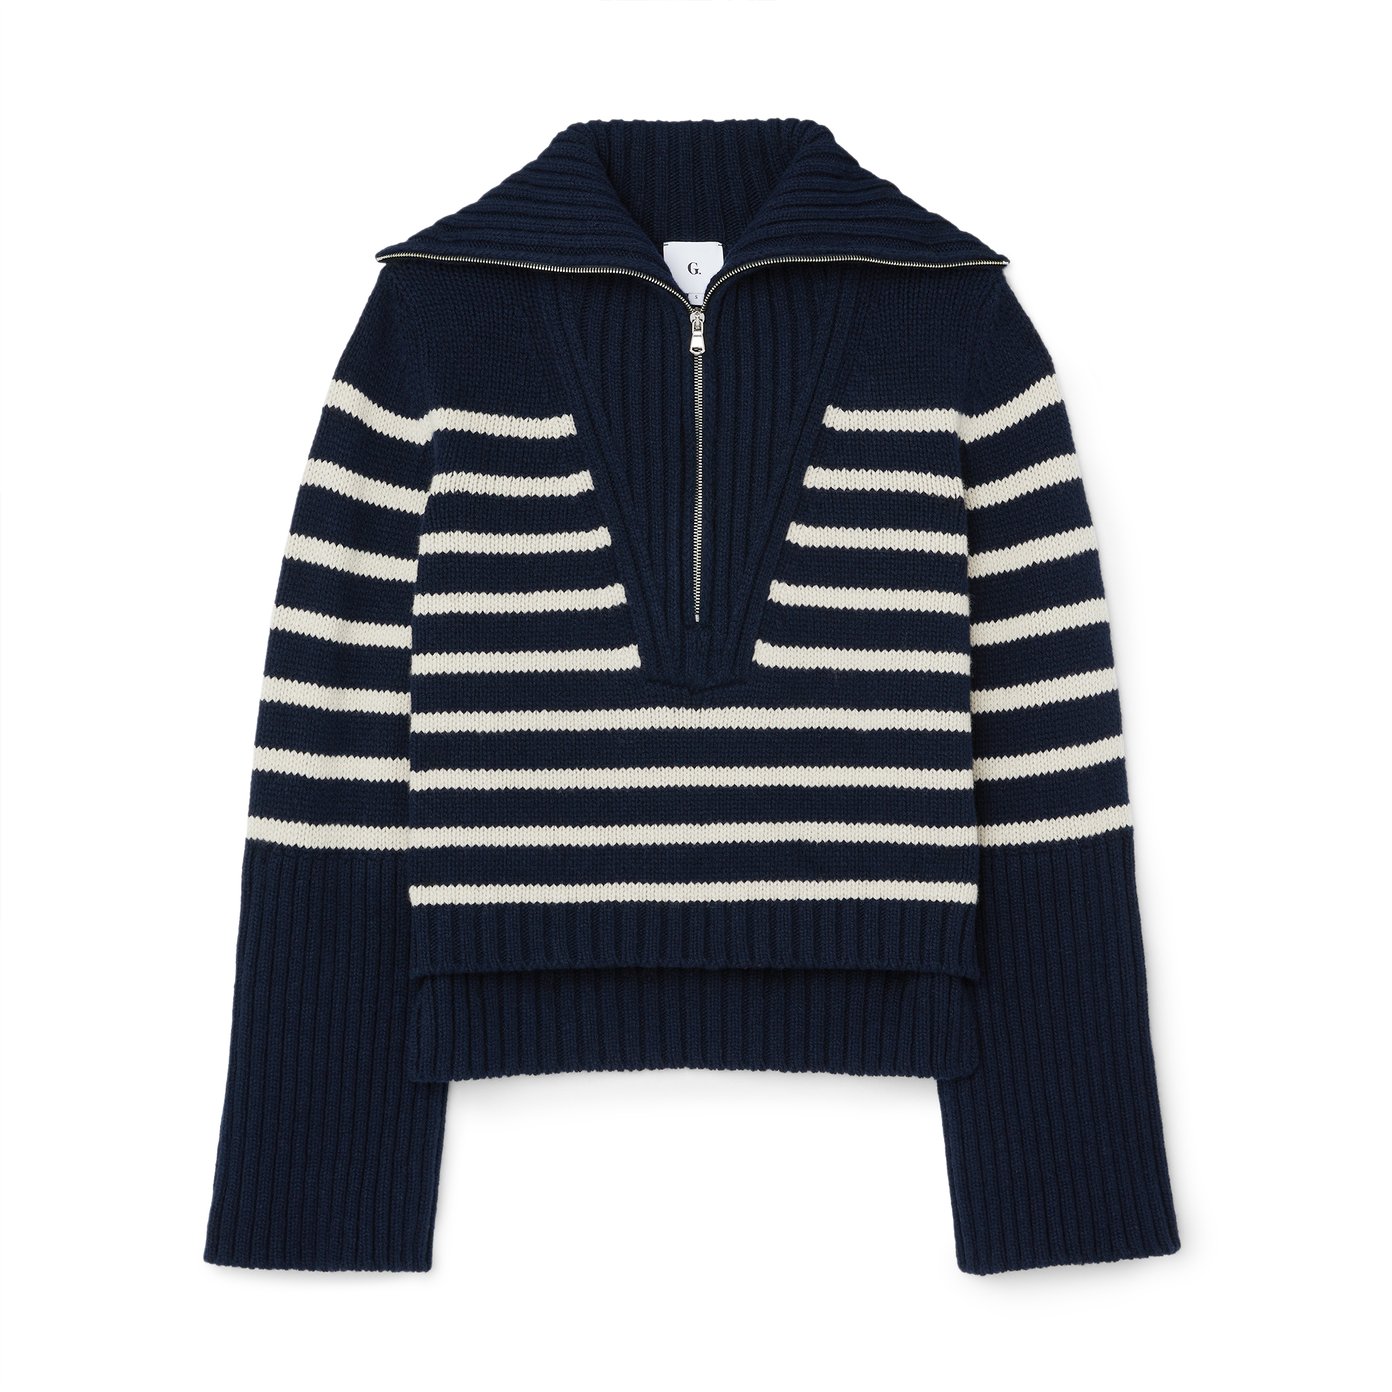 G. Label by goop Shand Half-Zip Striped Sweater